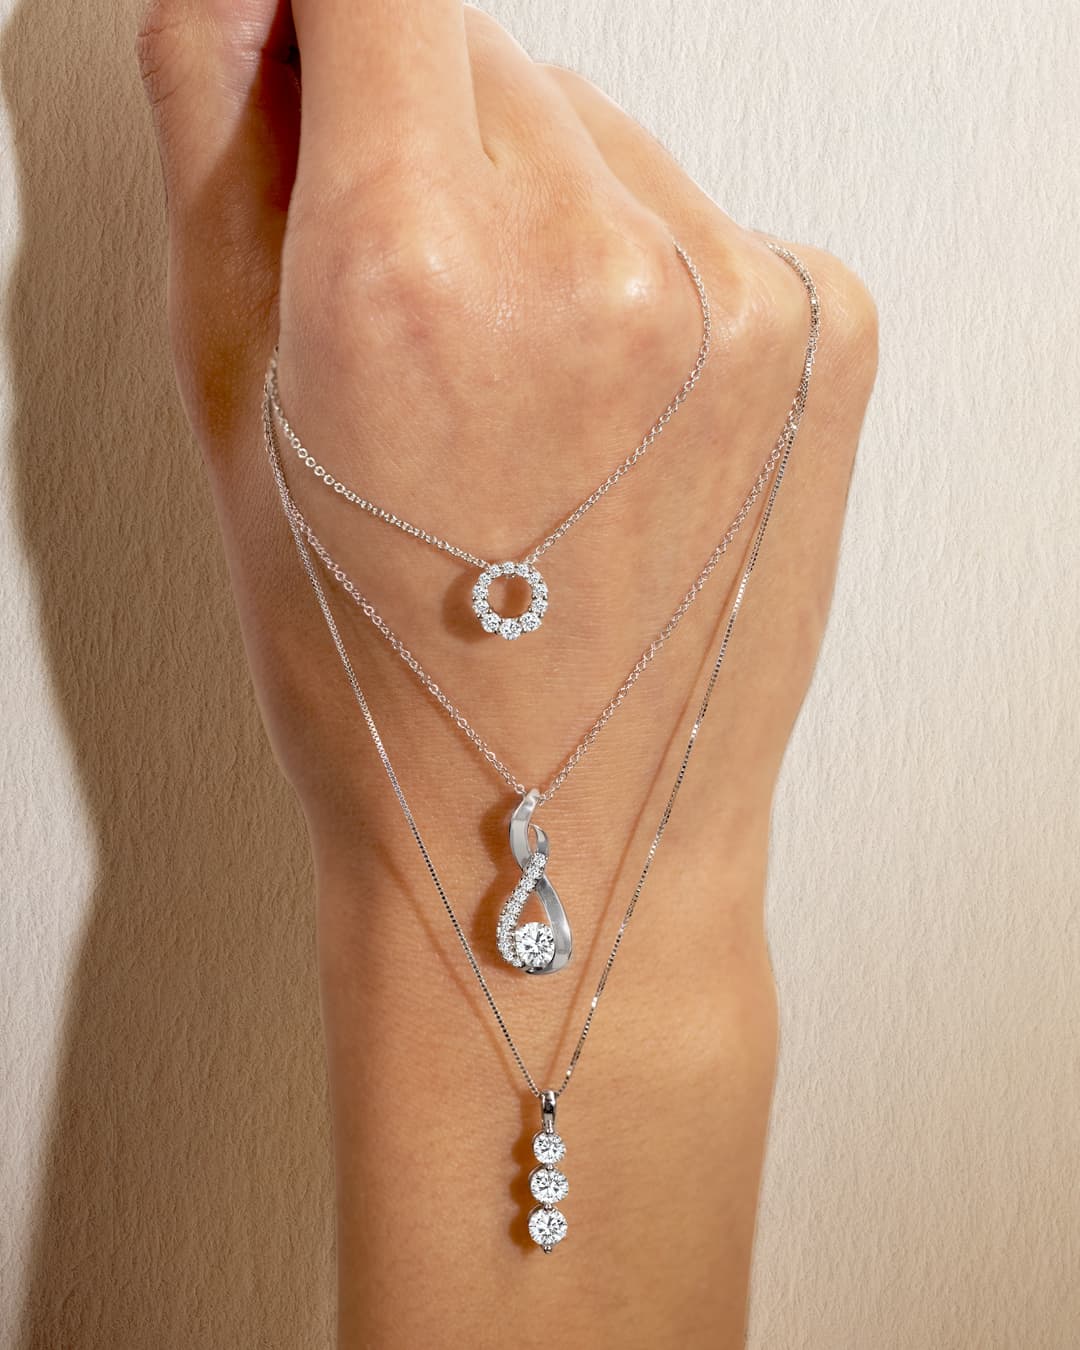 diamond necklaces: graduation gifts